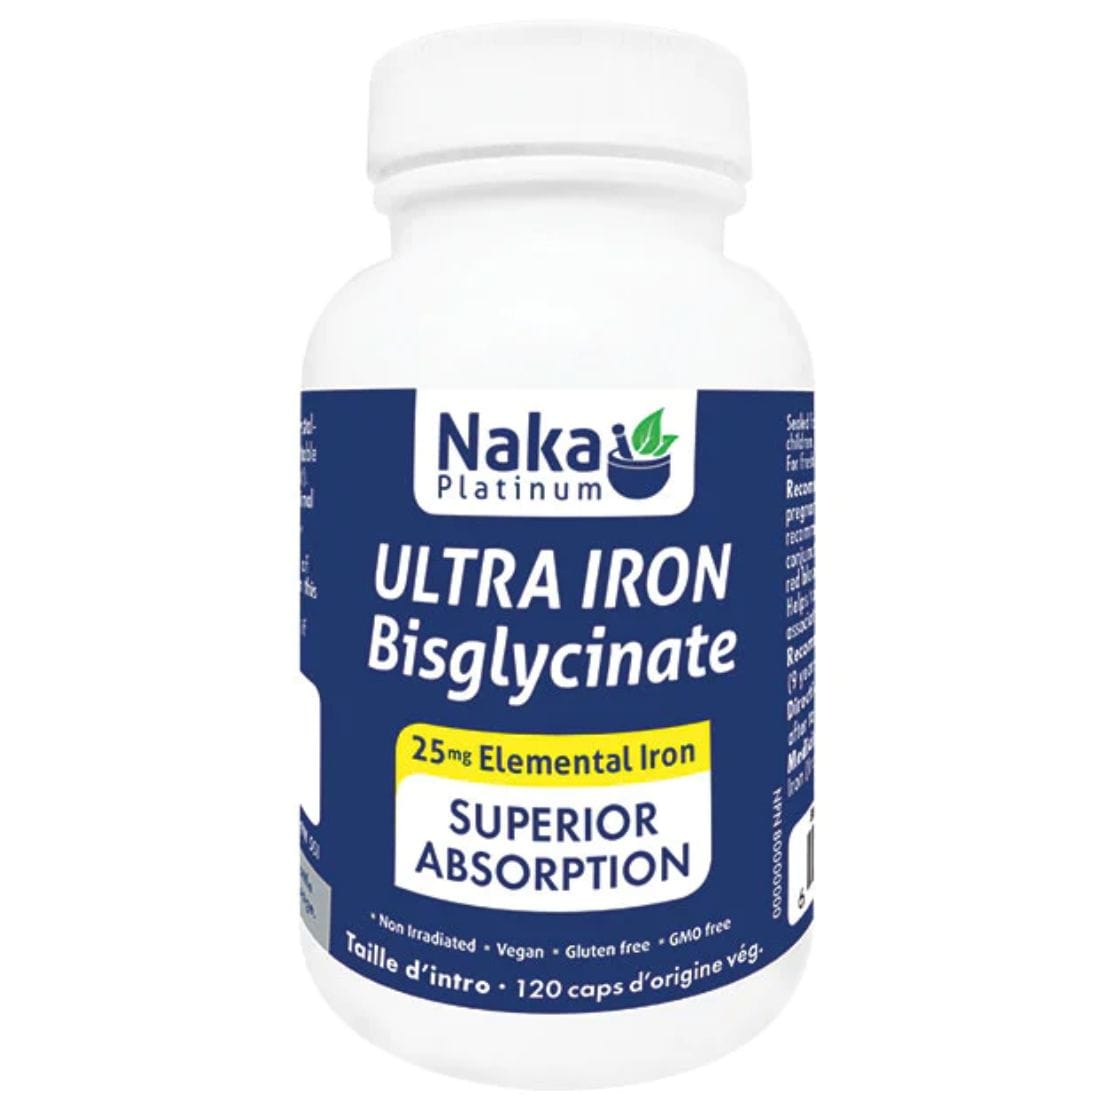 Naka Platinum Ultra Iron 25mg, Iron Bisglycinate, 120 Vegetable Capsules